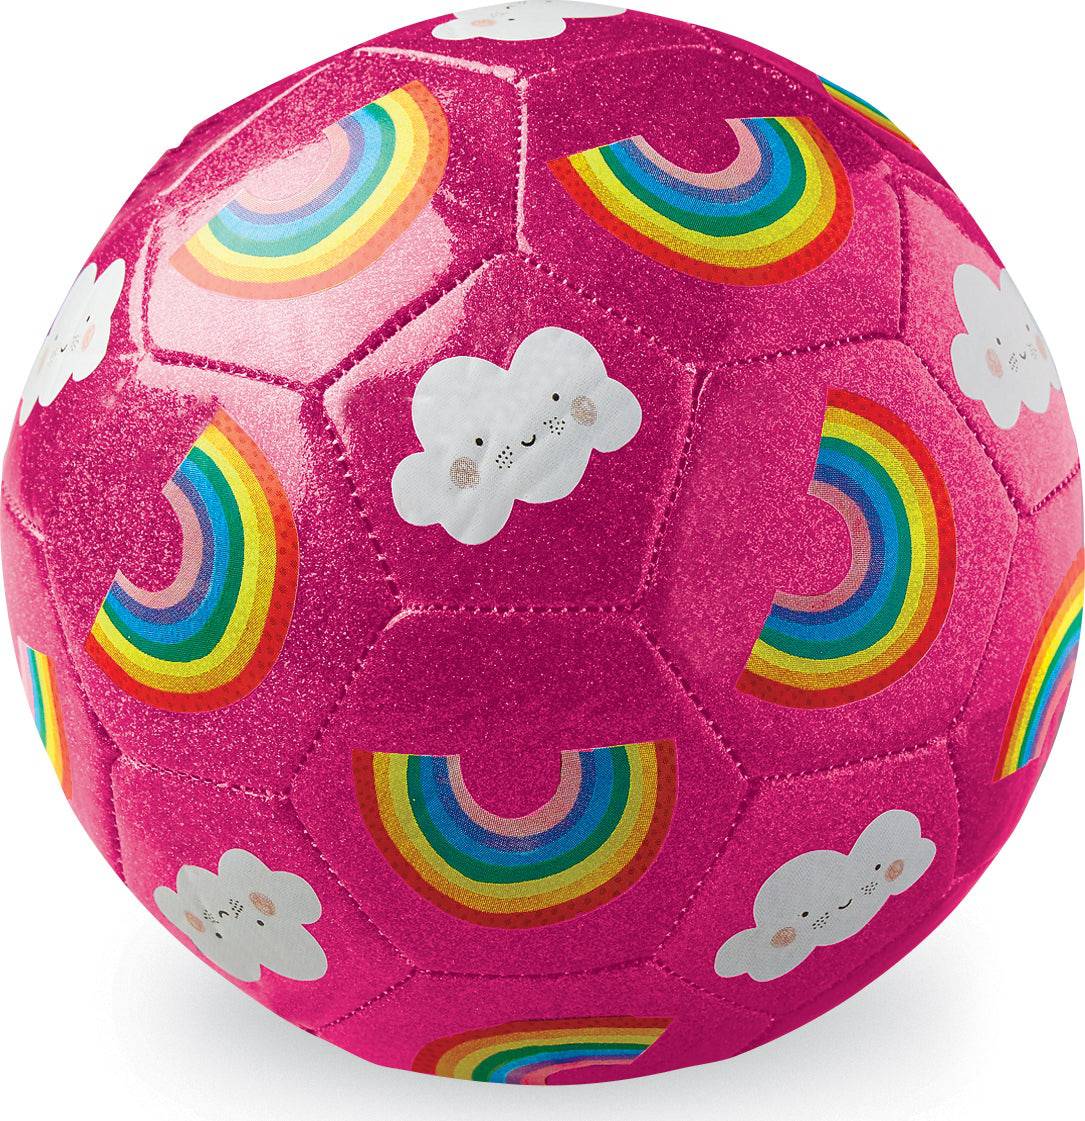 Glitter Rainbow Soccer Ball - A Child's Delight